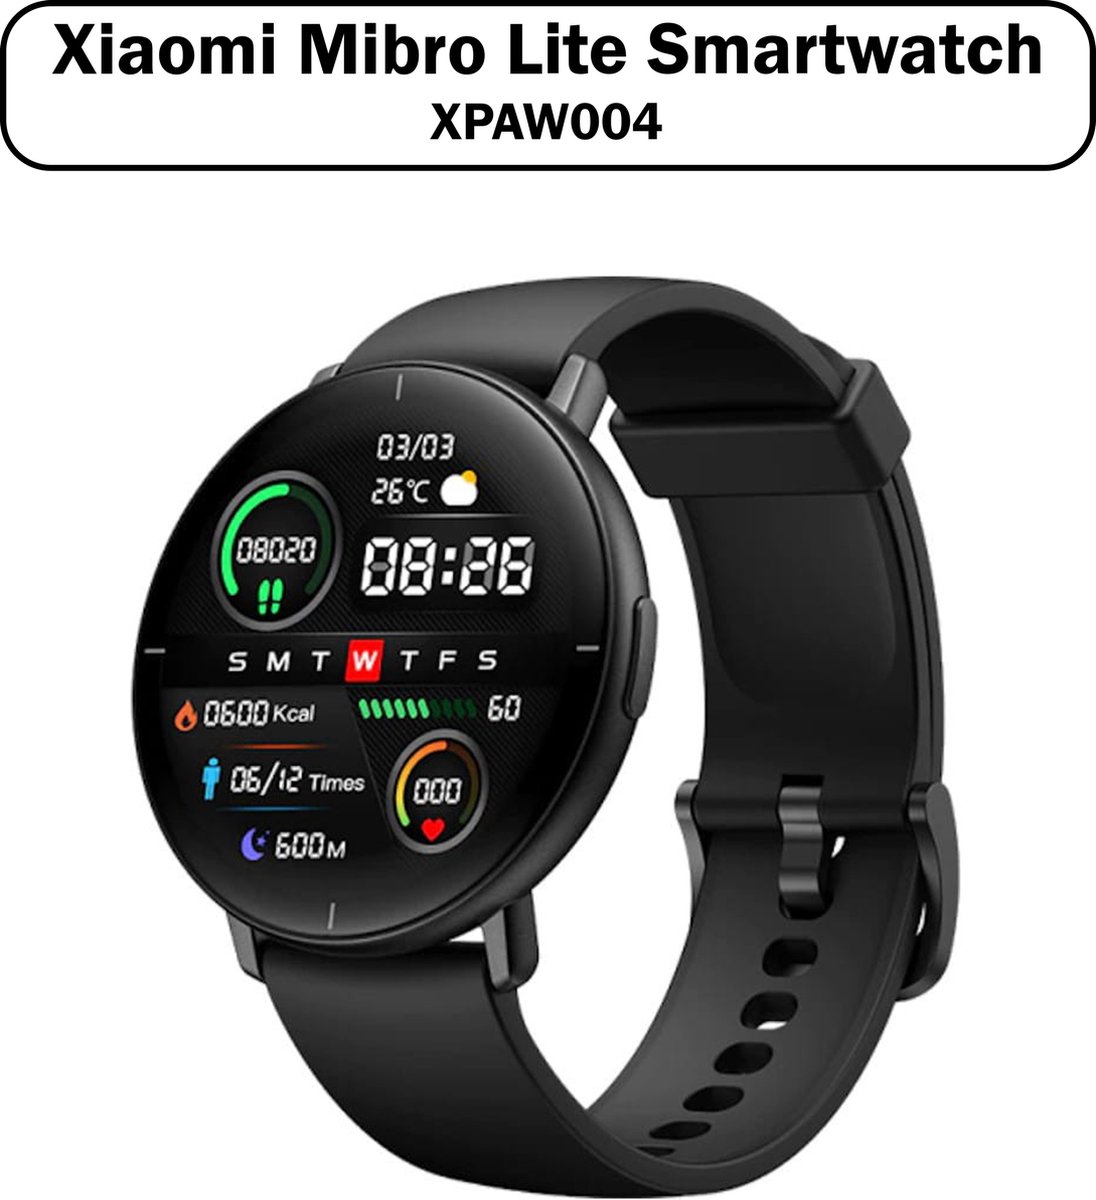 Xiaomi Mibro Lite Smartwatch Xpaw004